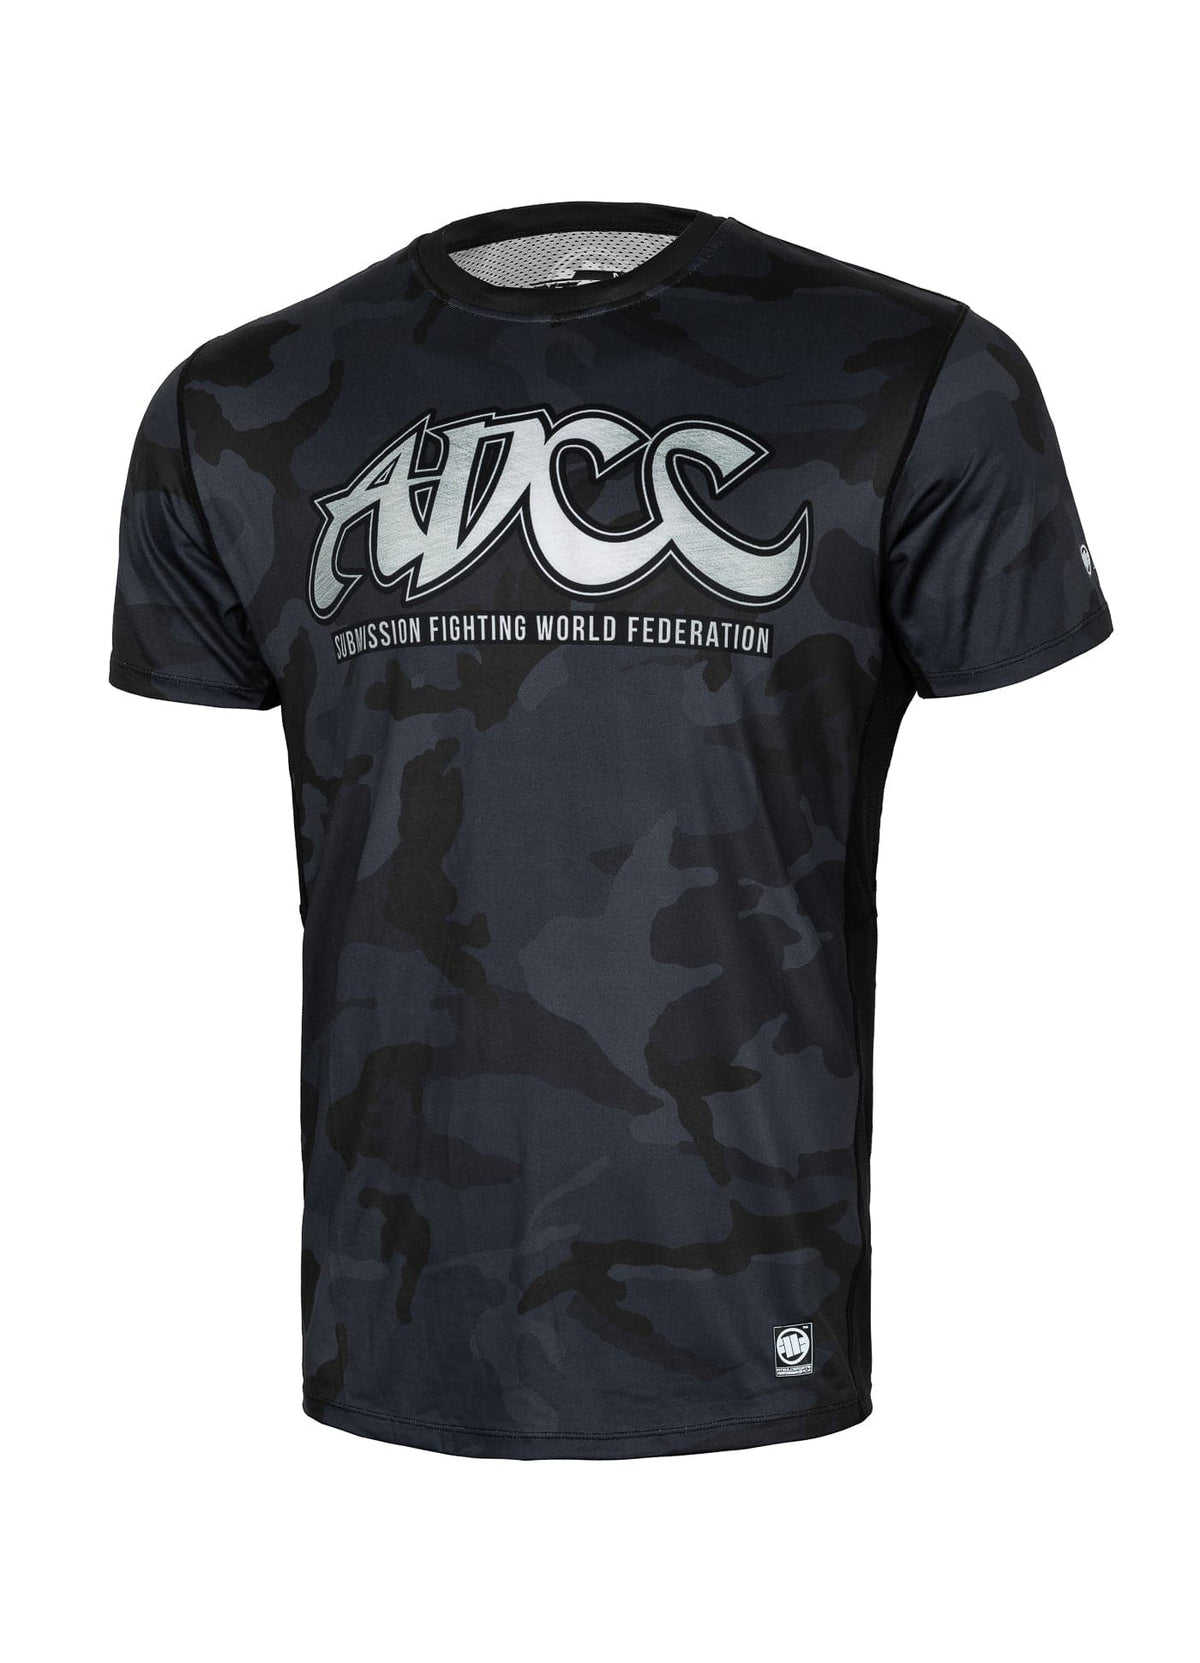 ADCC 2 All Black Camo Mesh T-shirt.